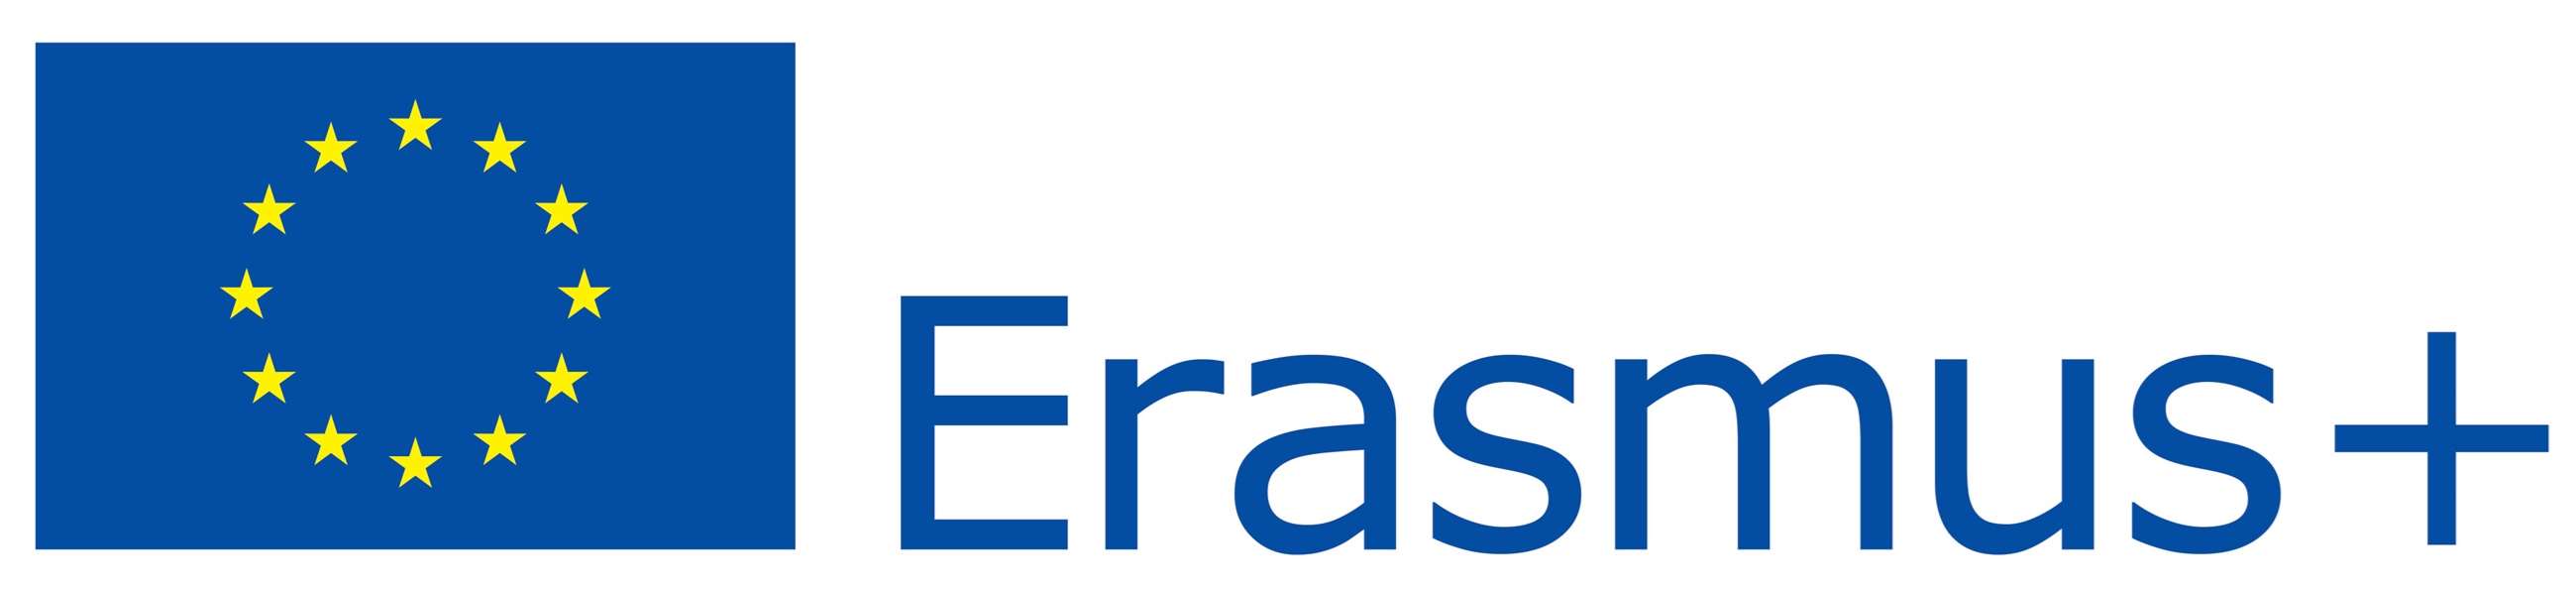 erasmus_logo1